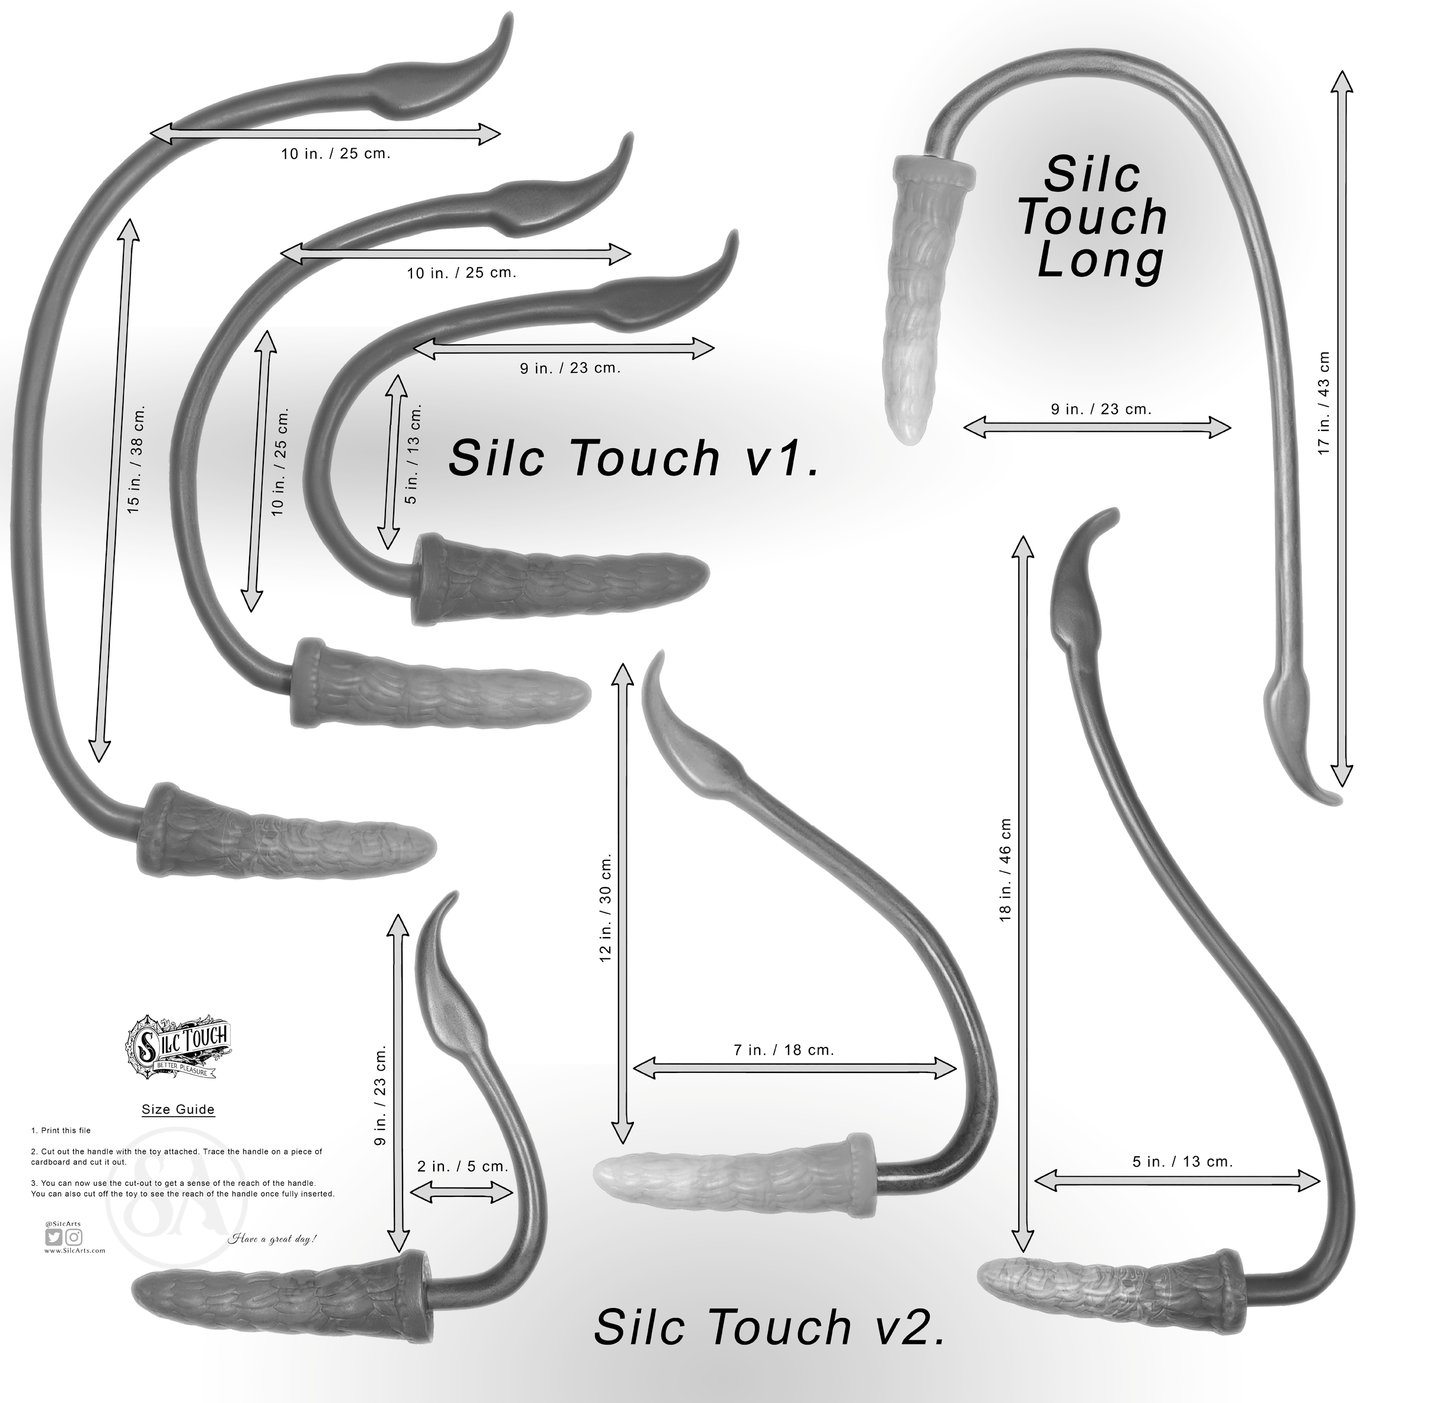 Silc Touch v2. - Ergonomic handle - Suction cup - Lg